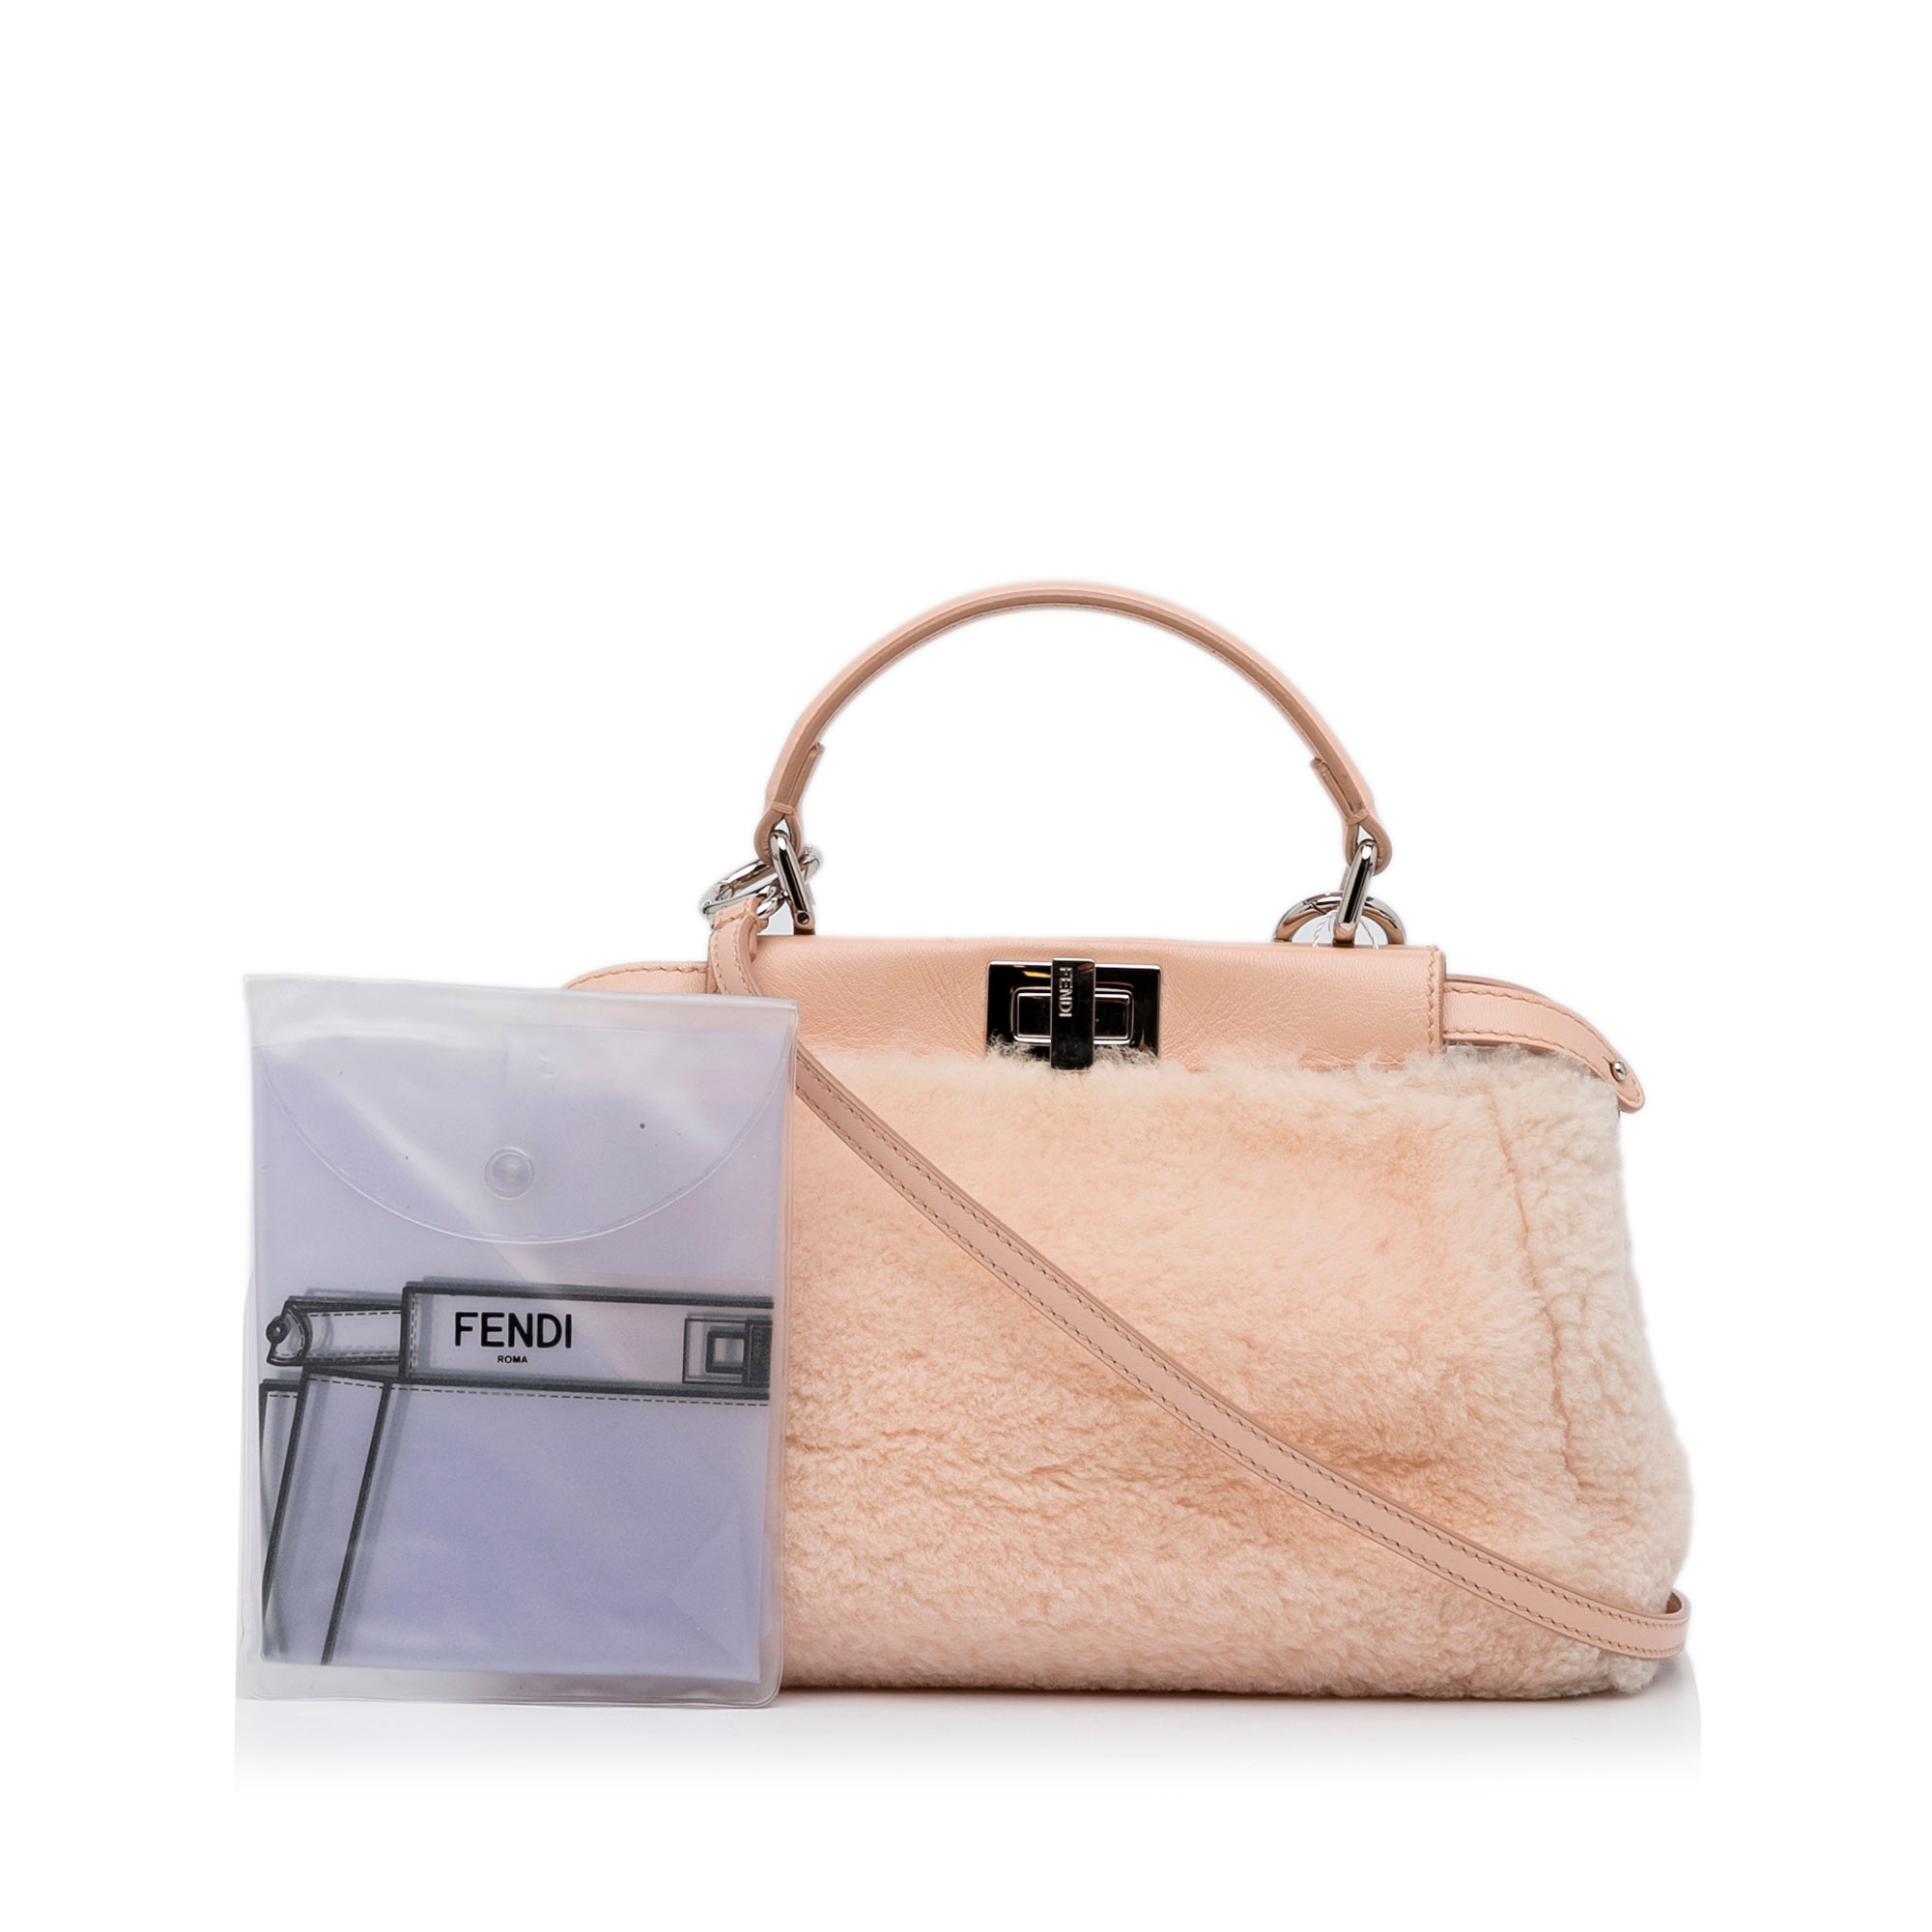 Luxury Designer Bag Investment Series: Fendi Peek-a-boo Bag Review